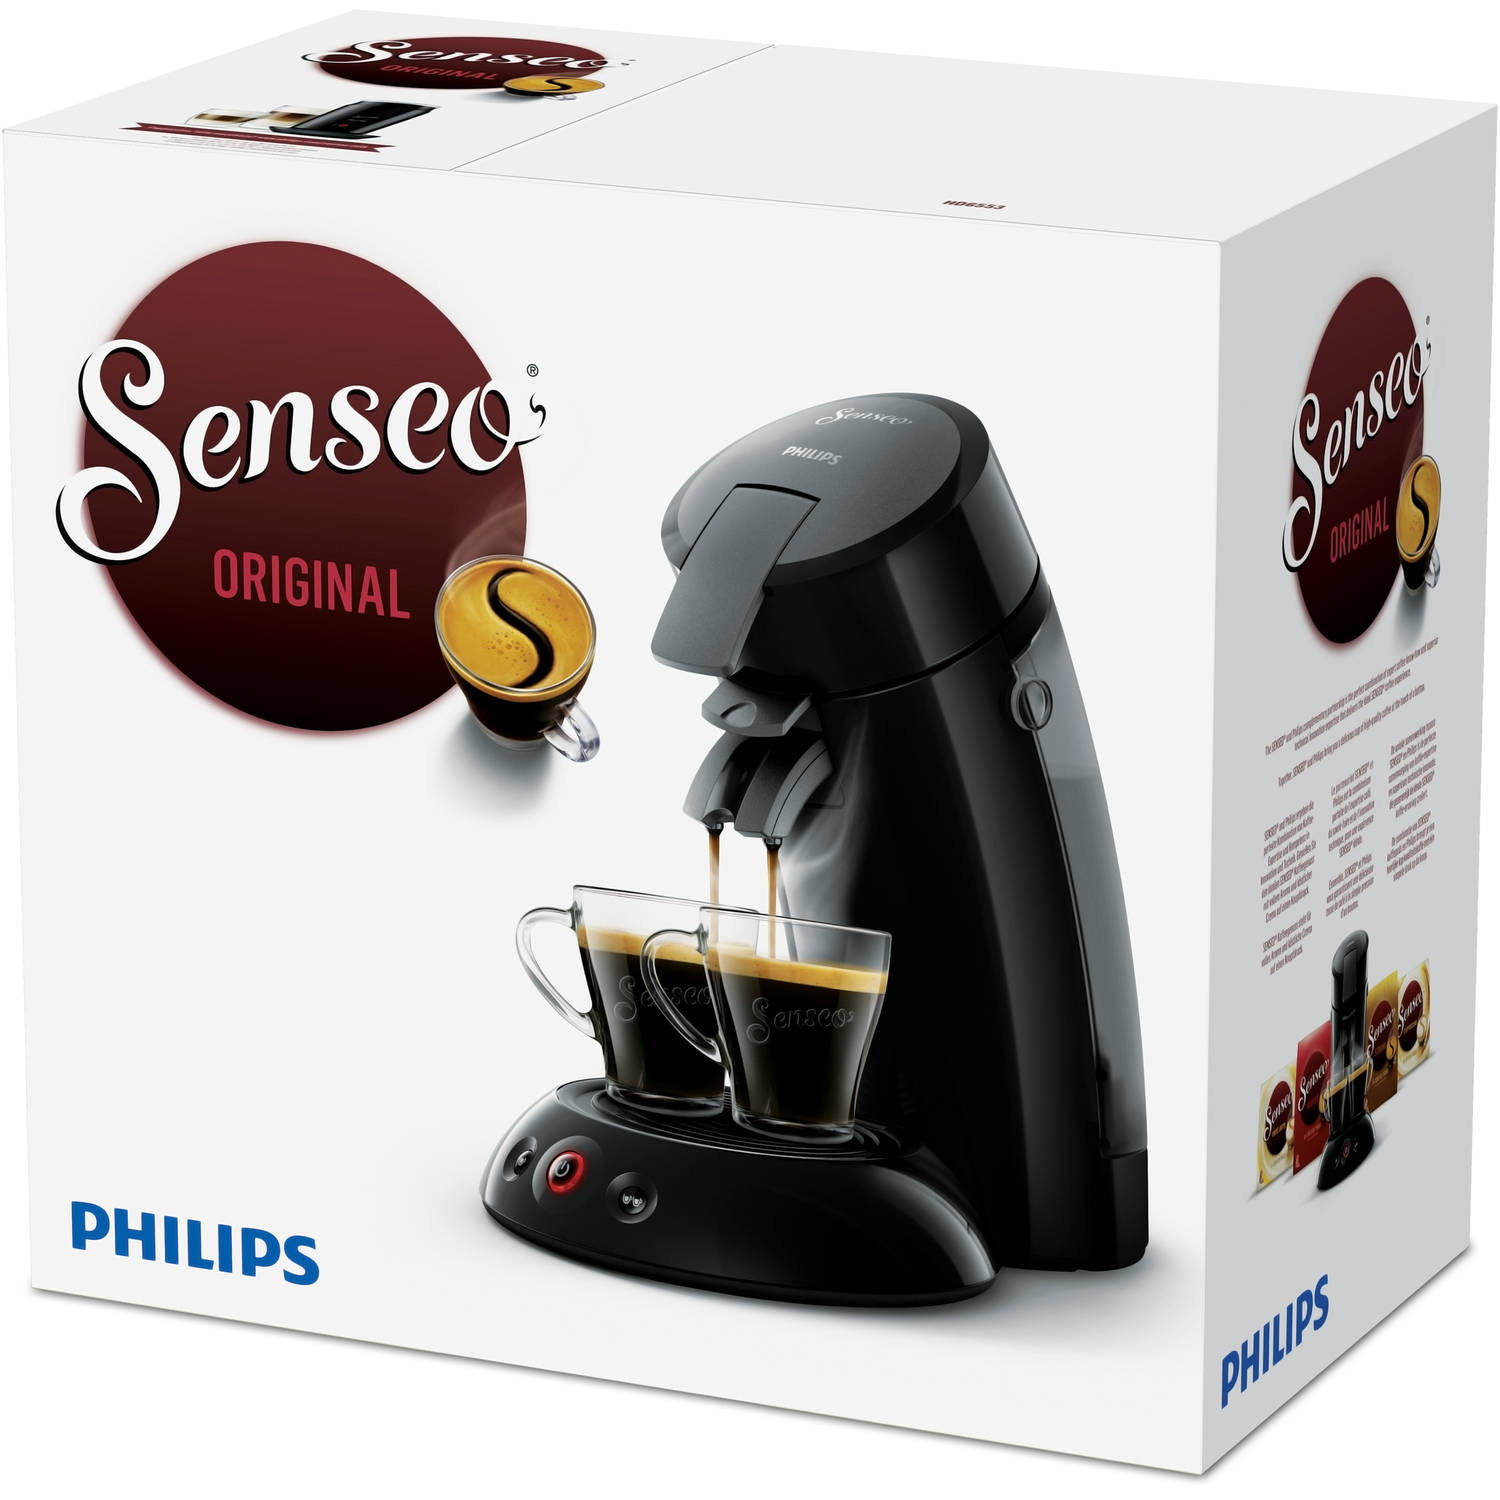 Incubus Universiteit kaas Philips SENSEO® Original HD6553/67 bundel t.w.v. 12,99 - zwart | Blokker